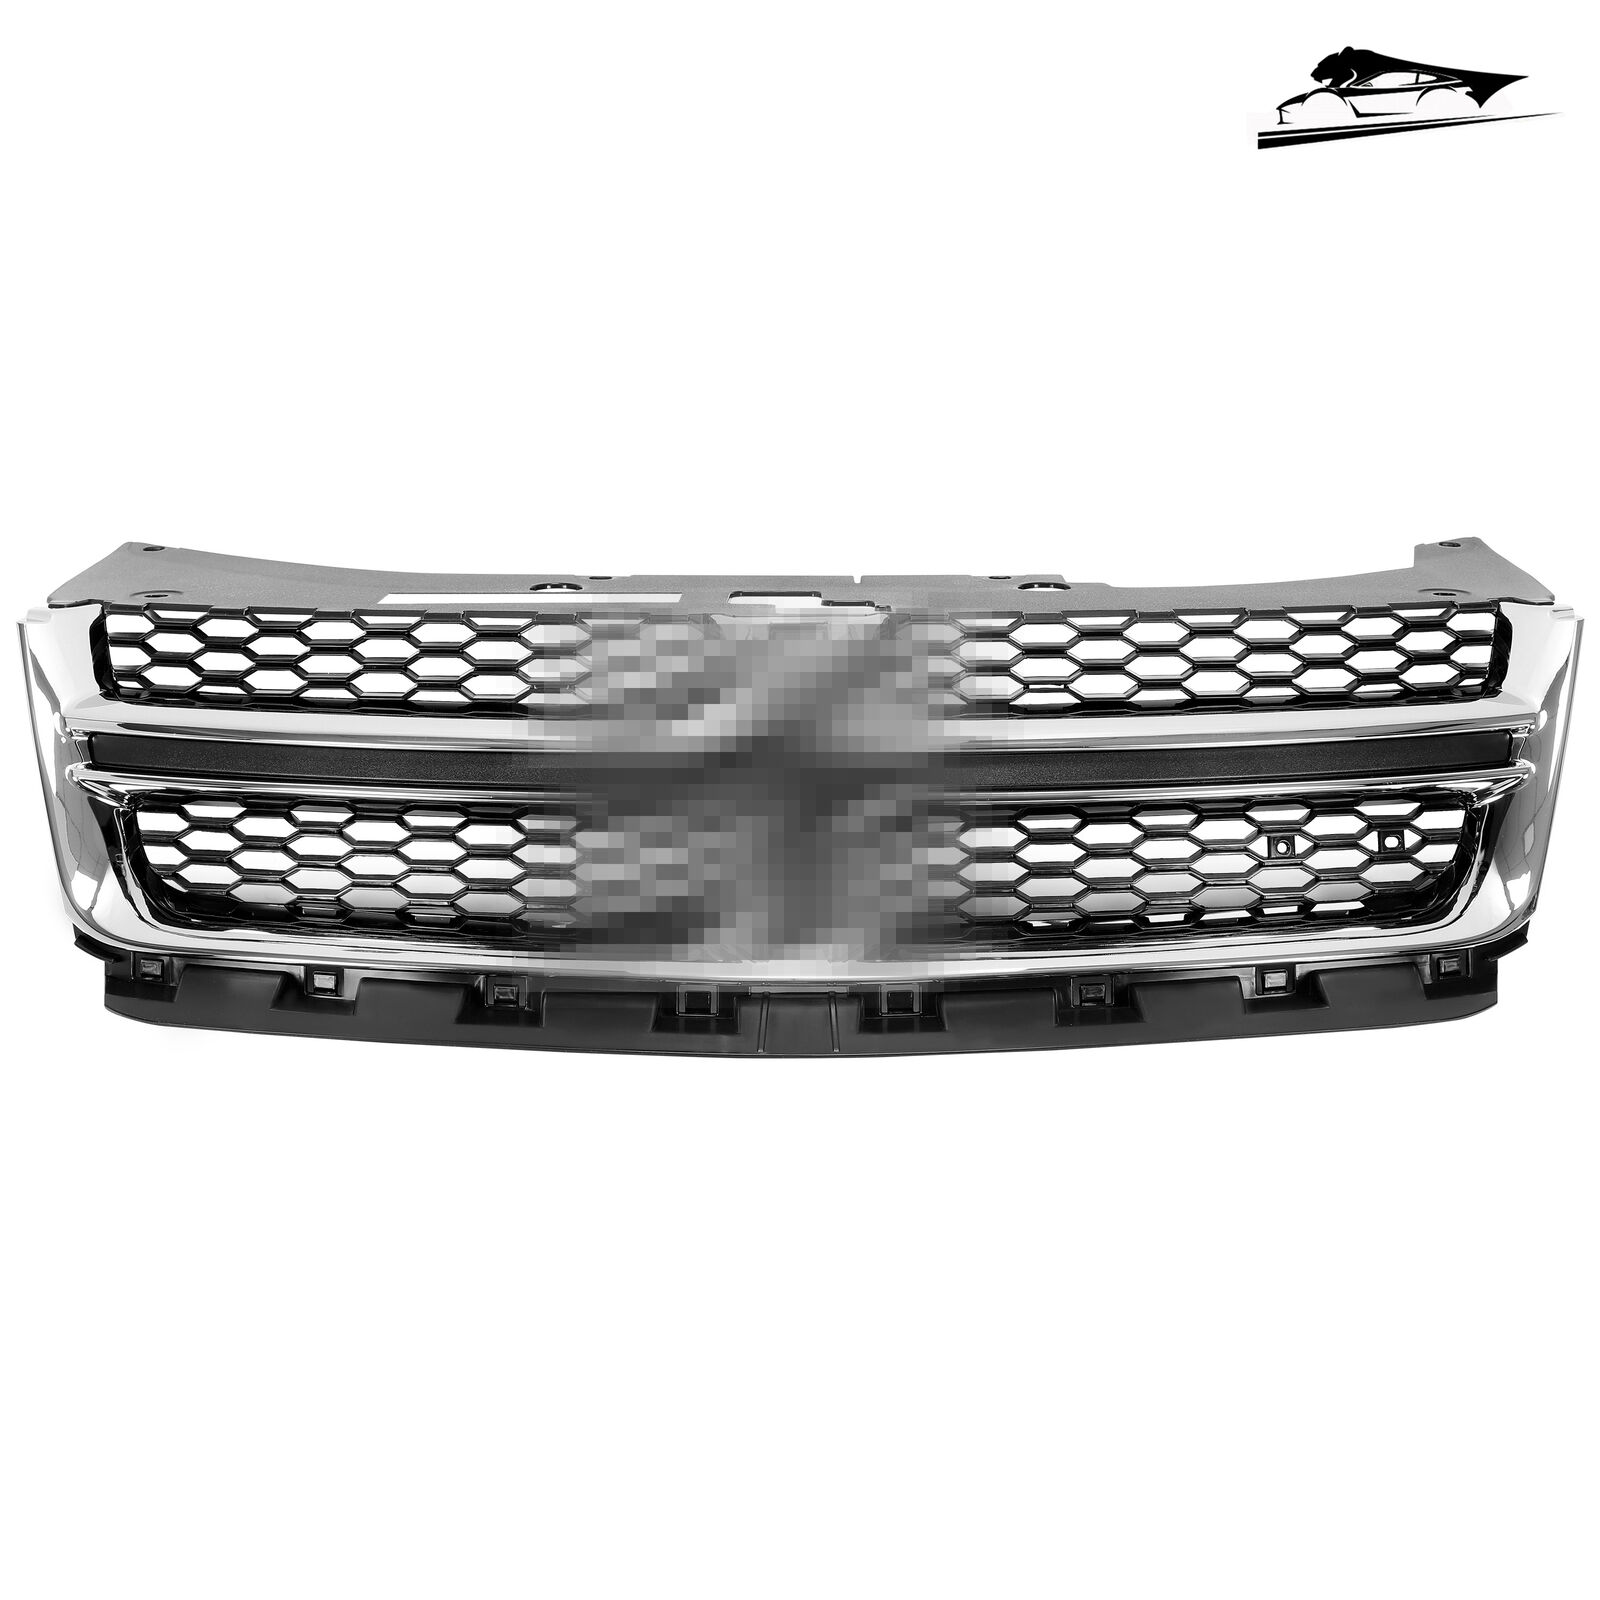 For Dodge Avenger 2011-2014 Front Bumper Upper Black w/Chrome Grille Grill